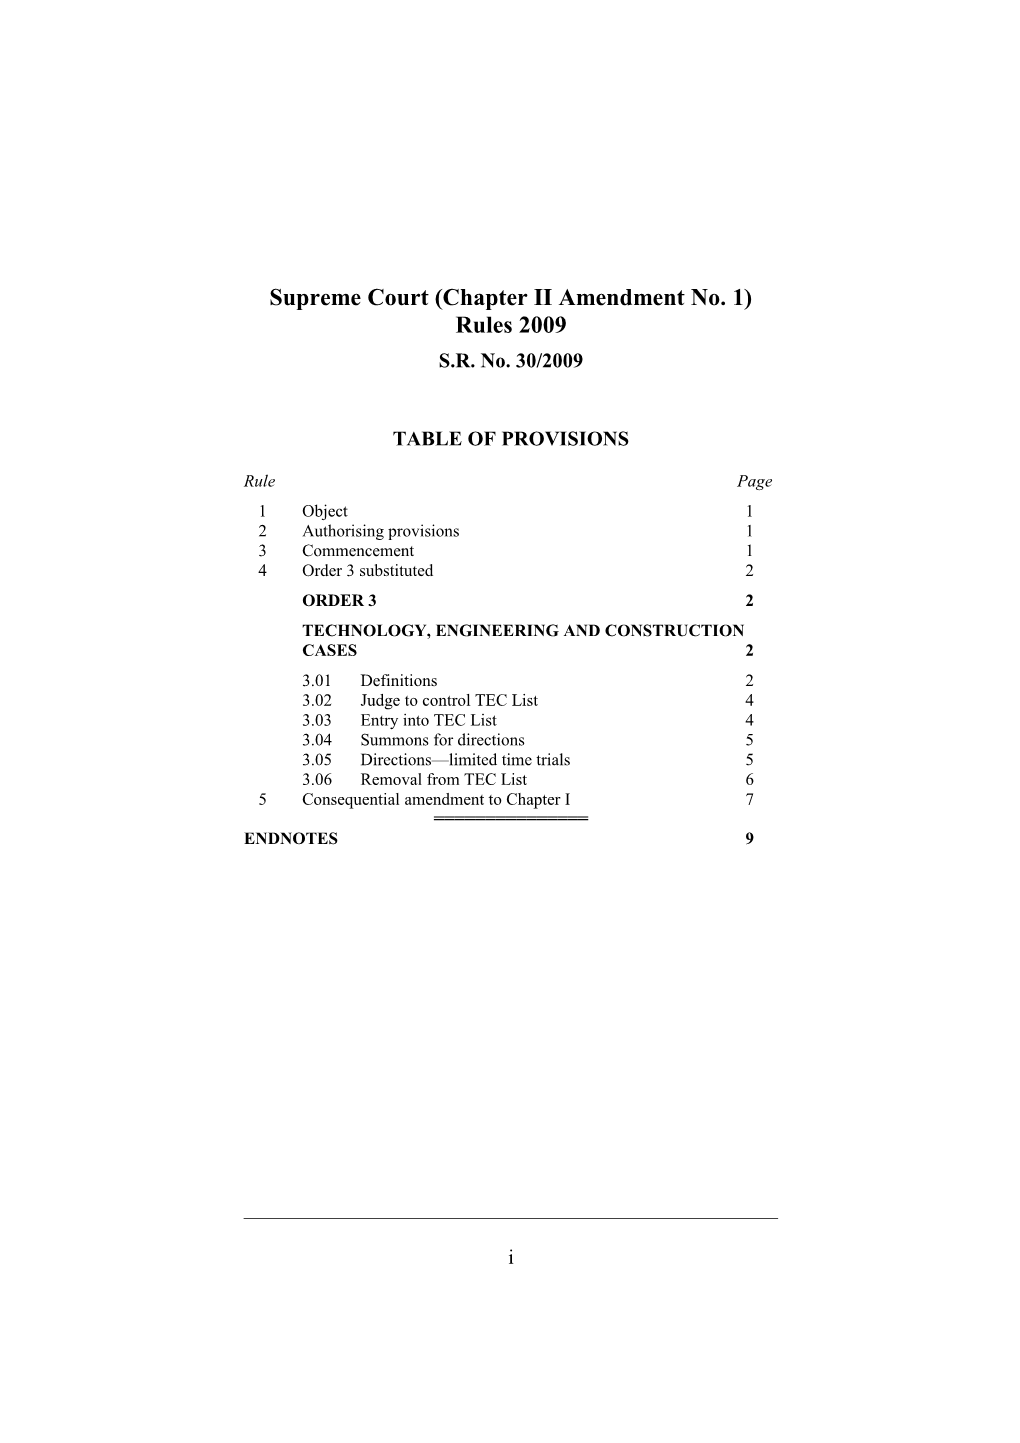 Supreme Court (Chapter II Amendment No. 1) Rules 2009